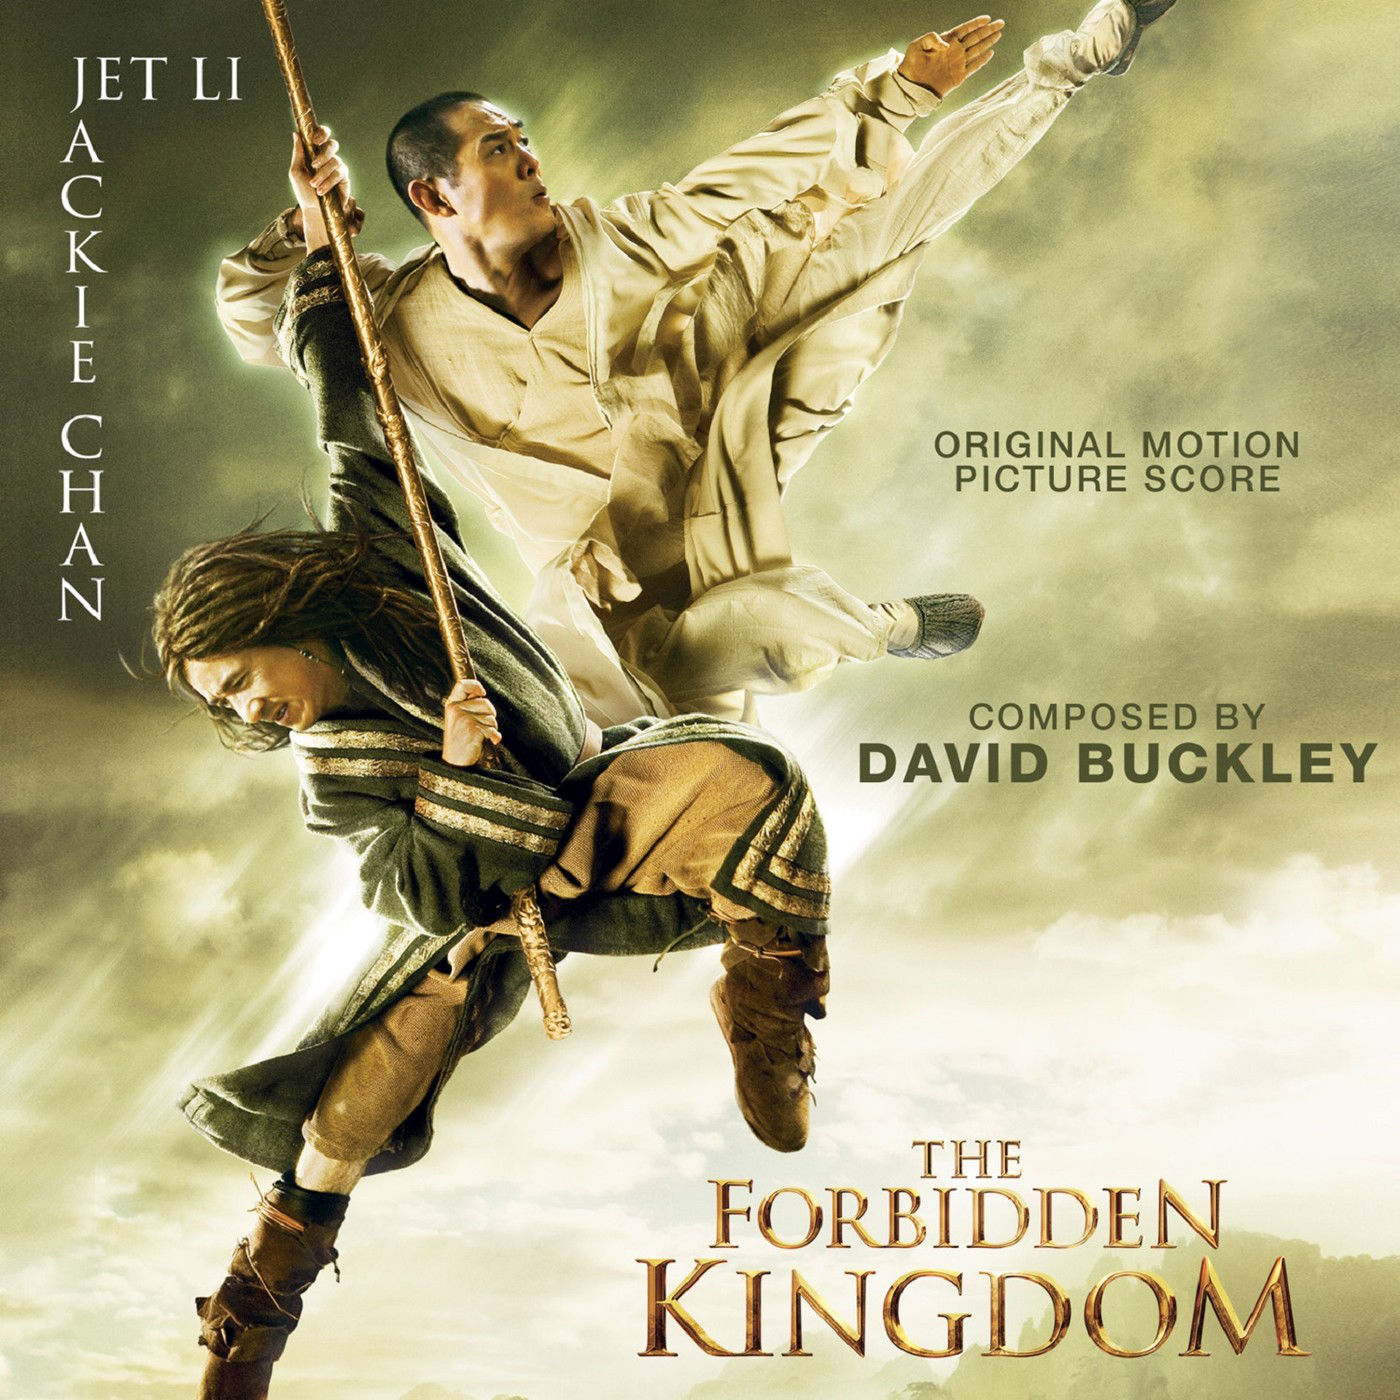 Download Film The Forbidden Kingdom Subtitle Indonesia